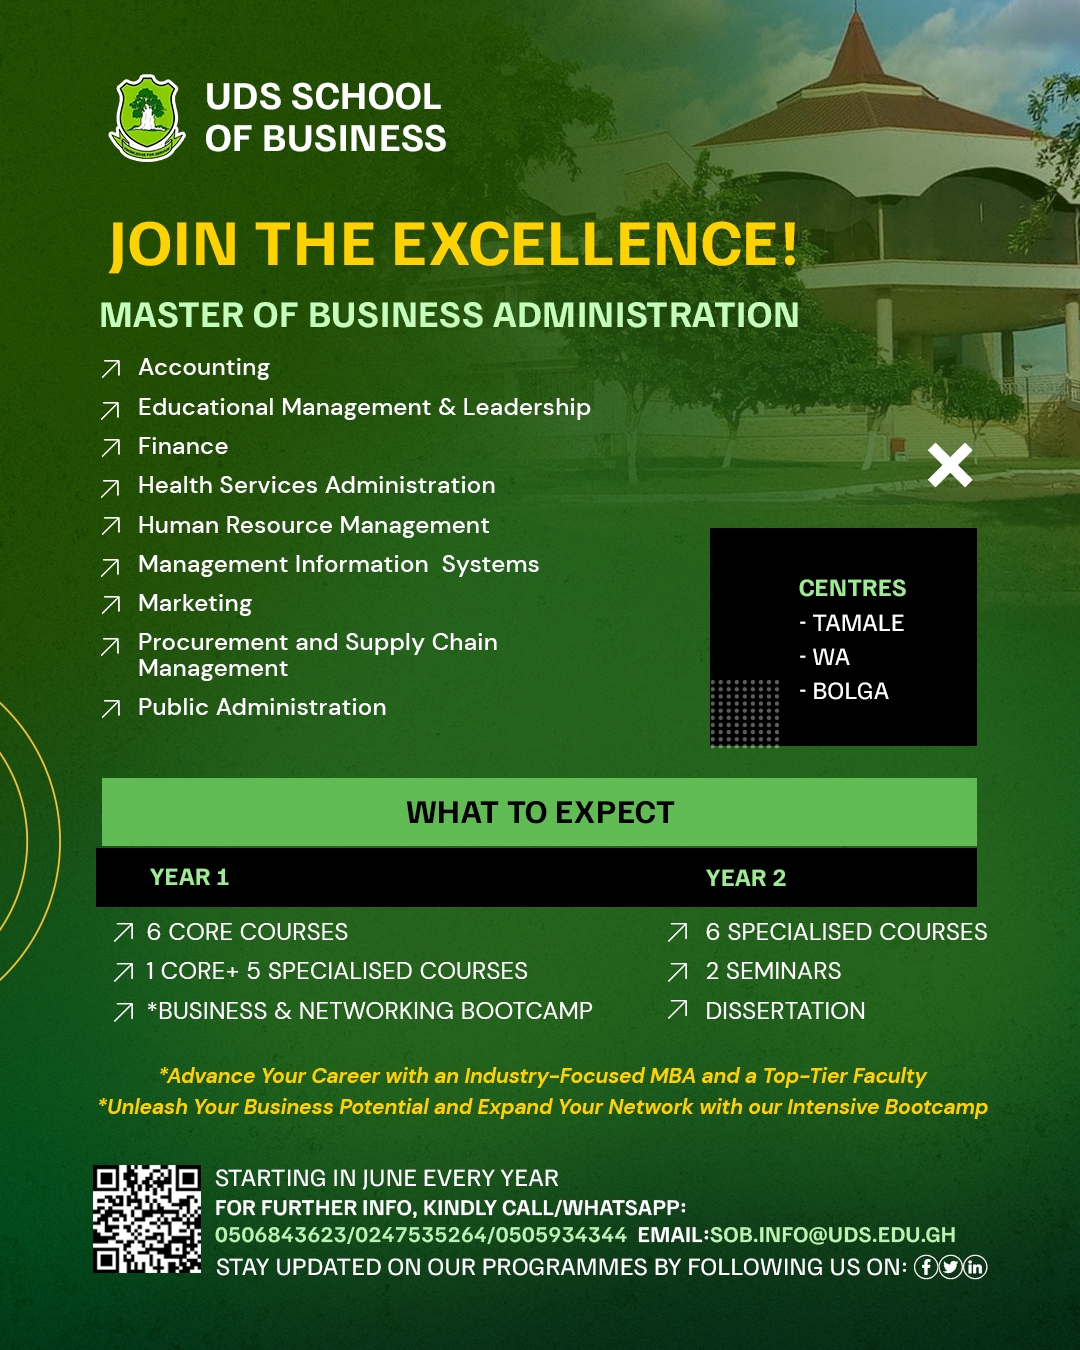 UDS School Of Business weekend MBA Programmes